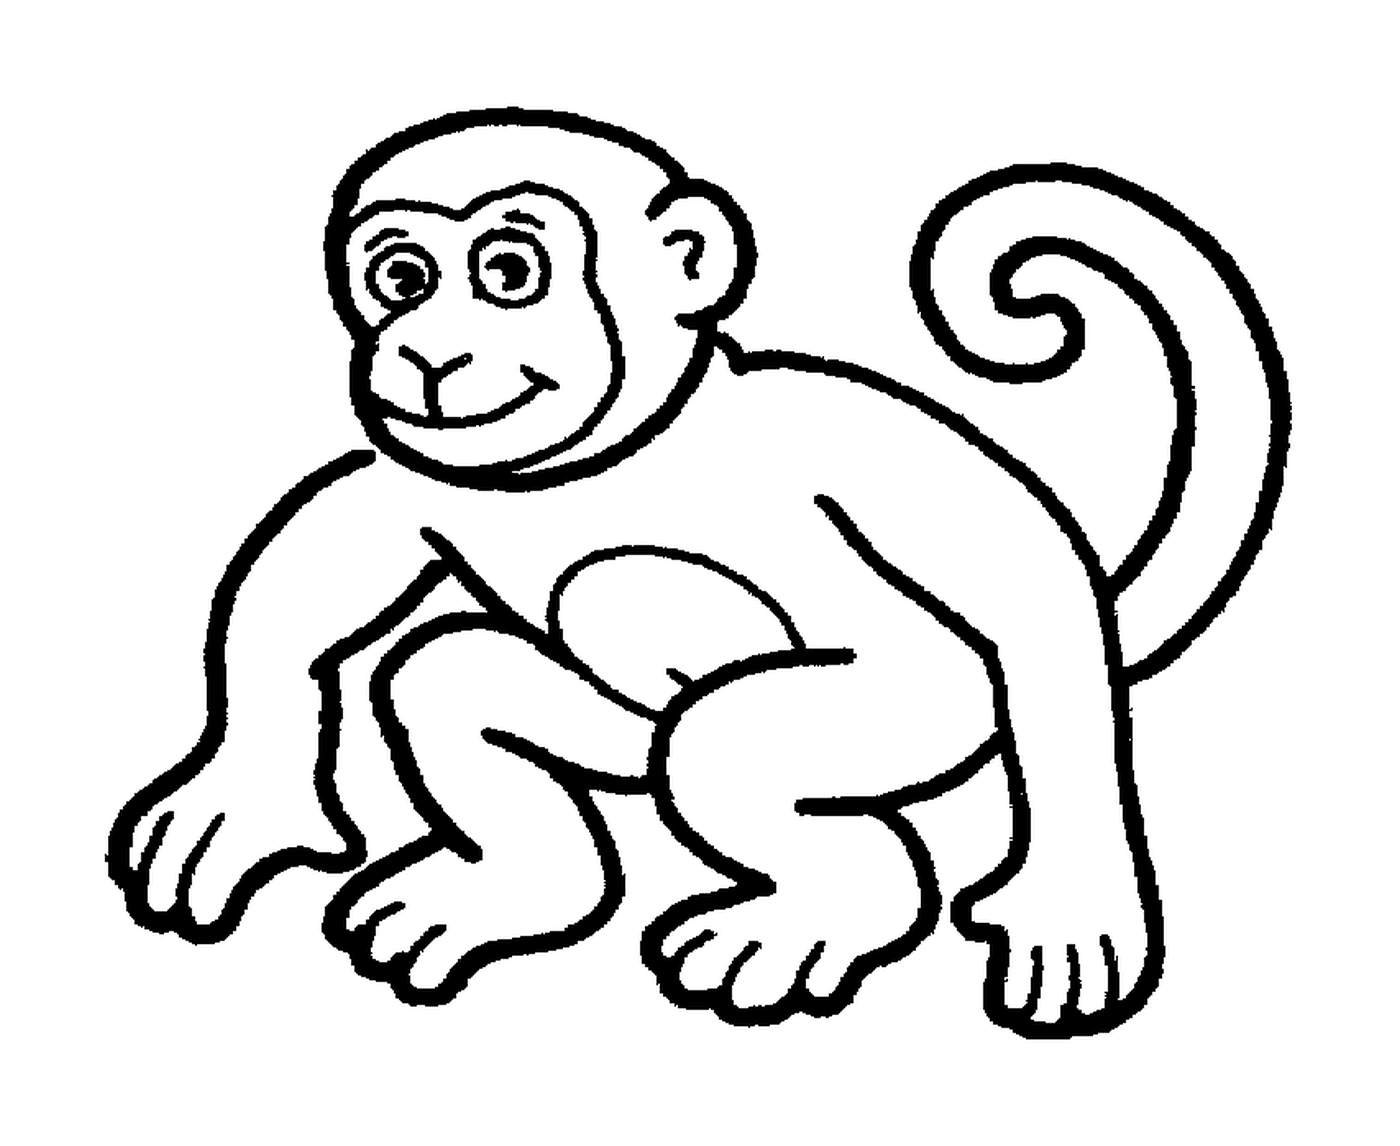  Monkey agile player 